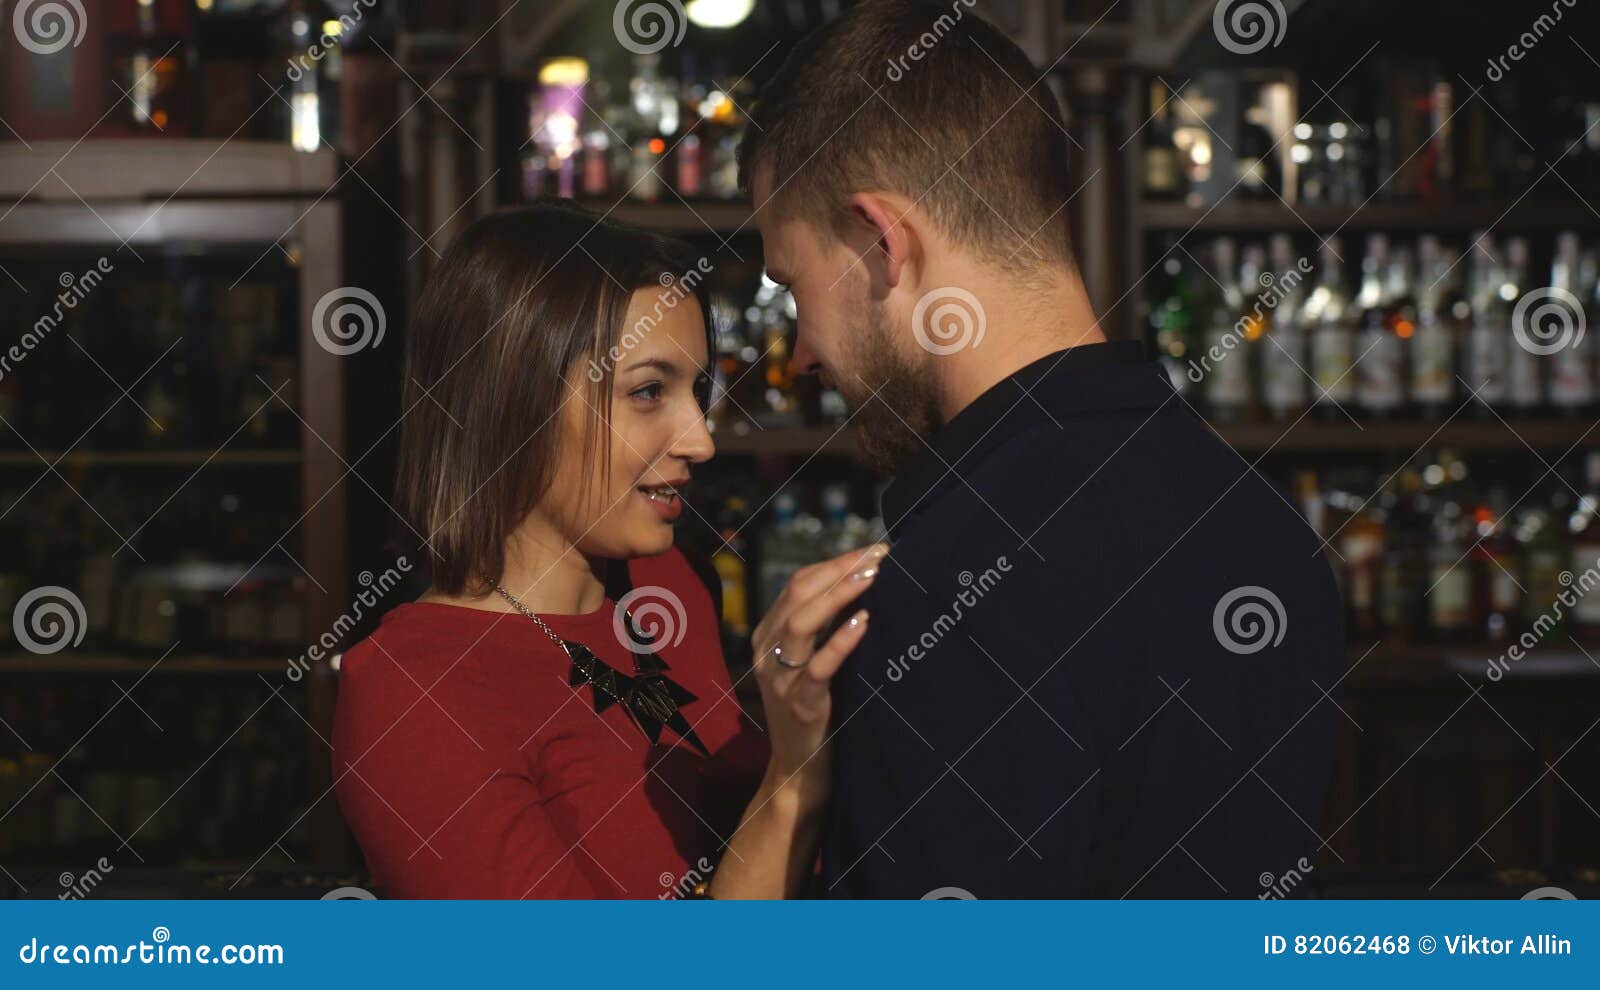 Woman Seducing a Man in a Bar and